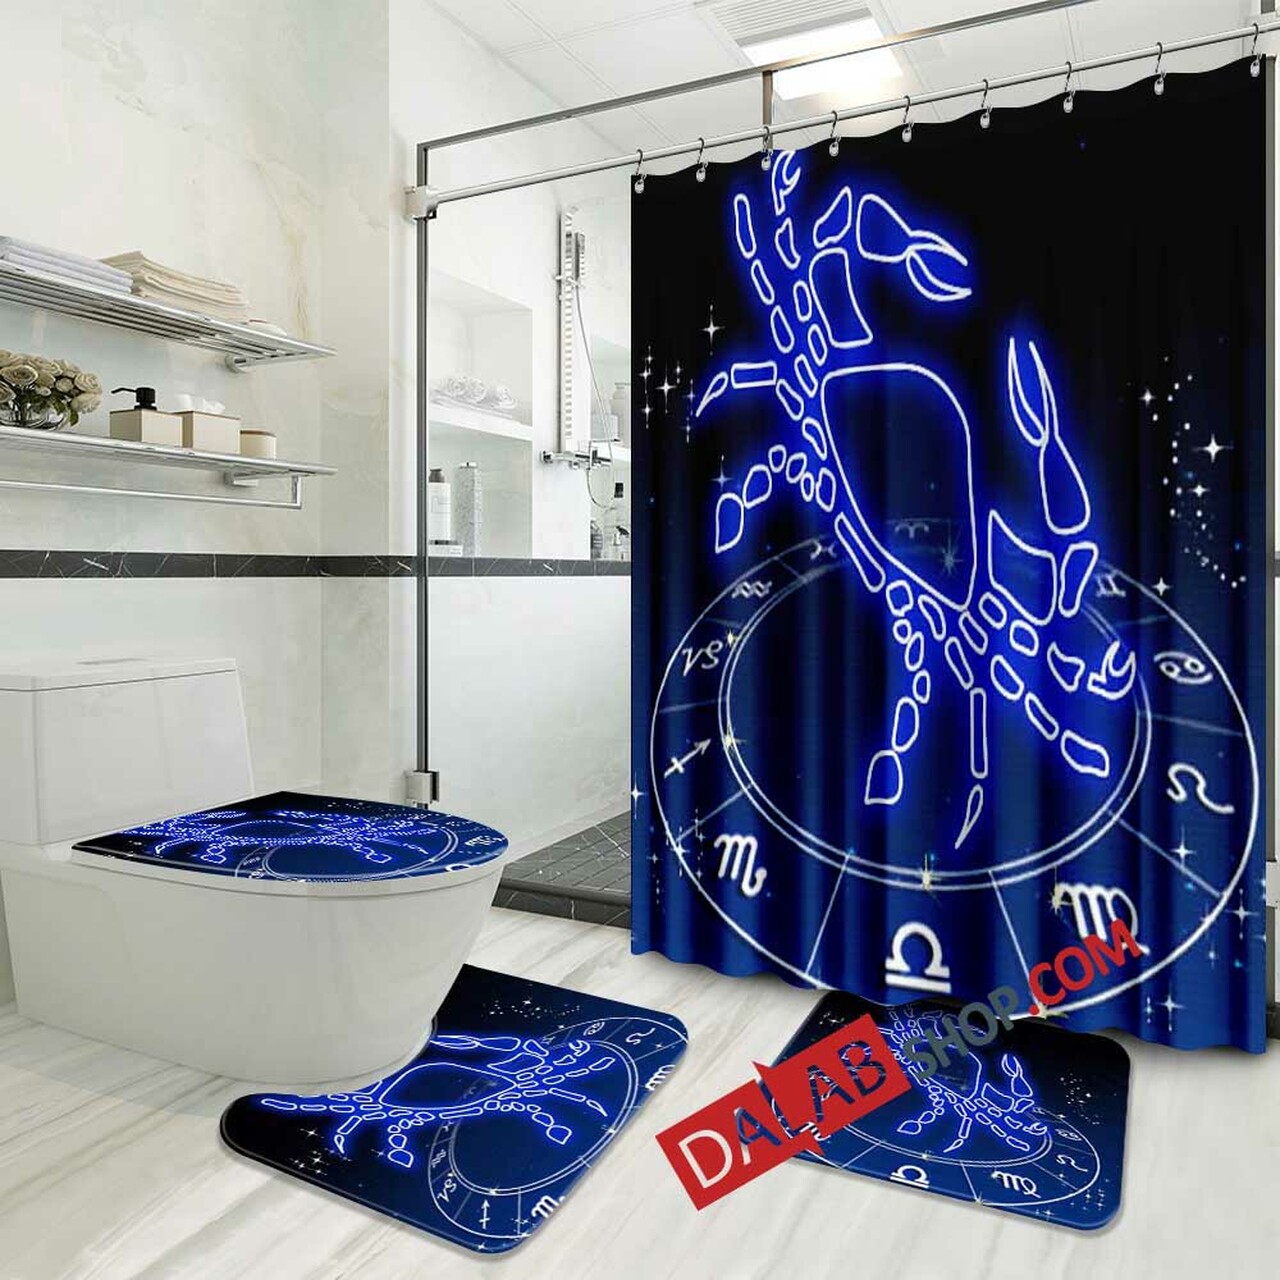 zodiac bathroom design